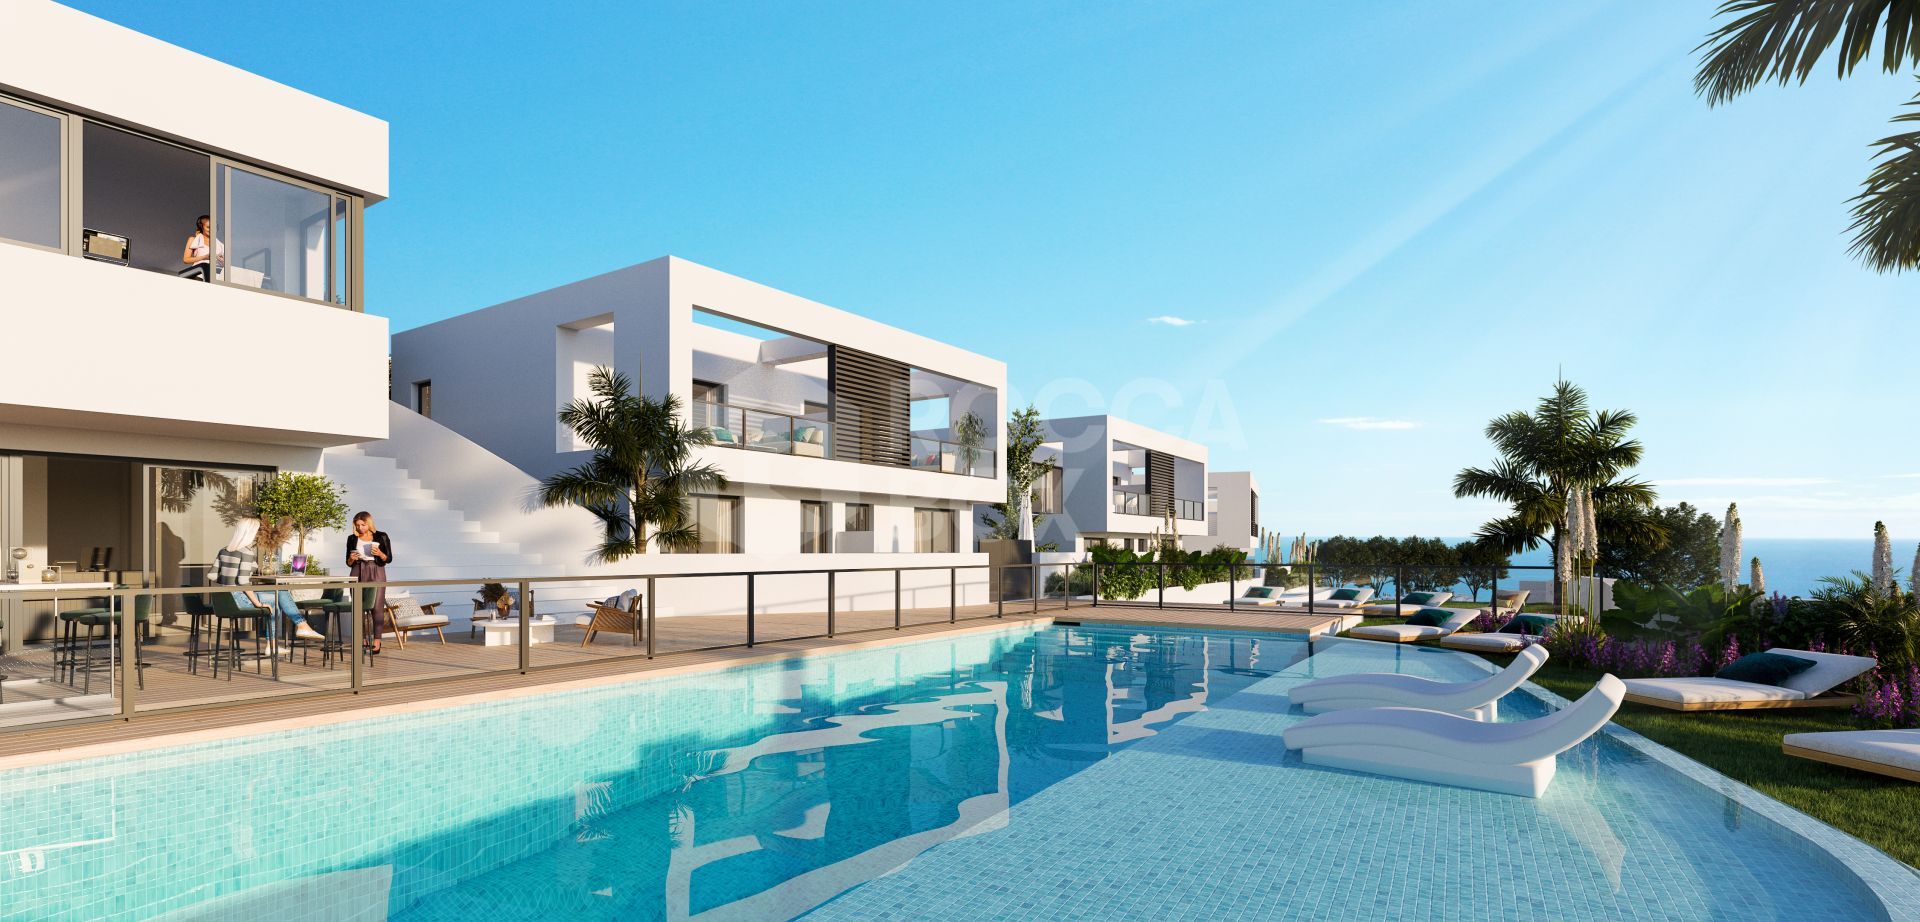 ARFTH179 - New off-plan development for semidated houses in Riviera del Sol, Mijas